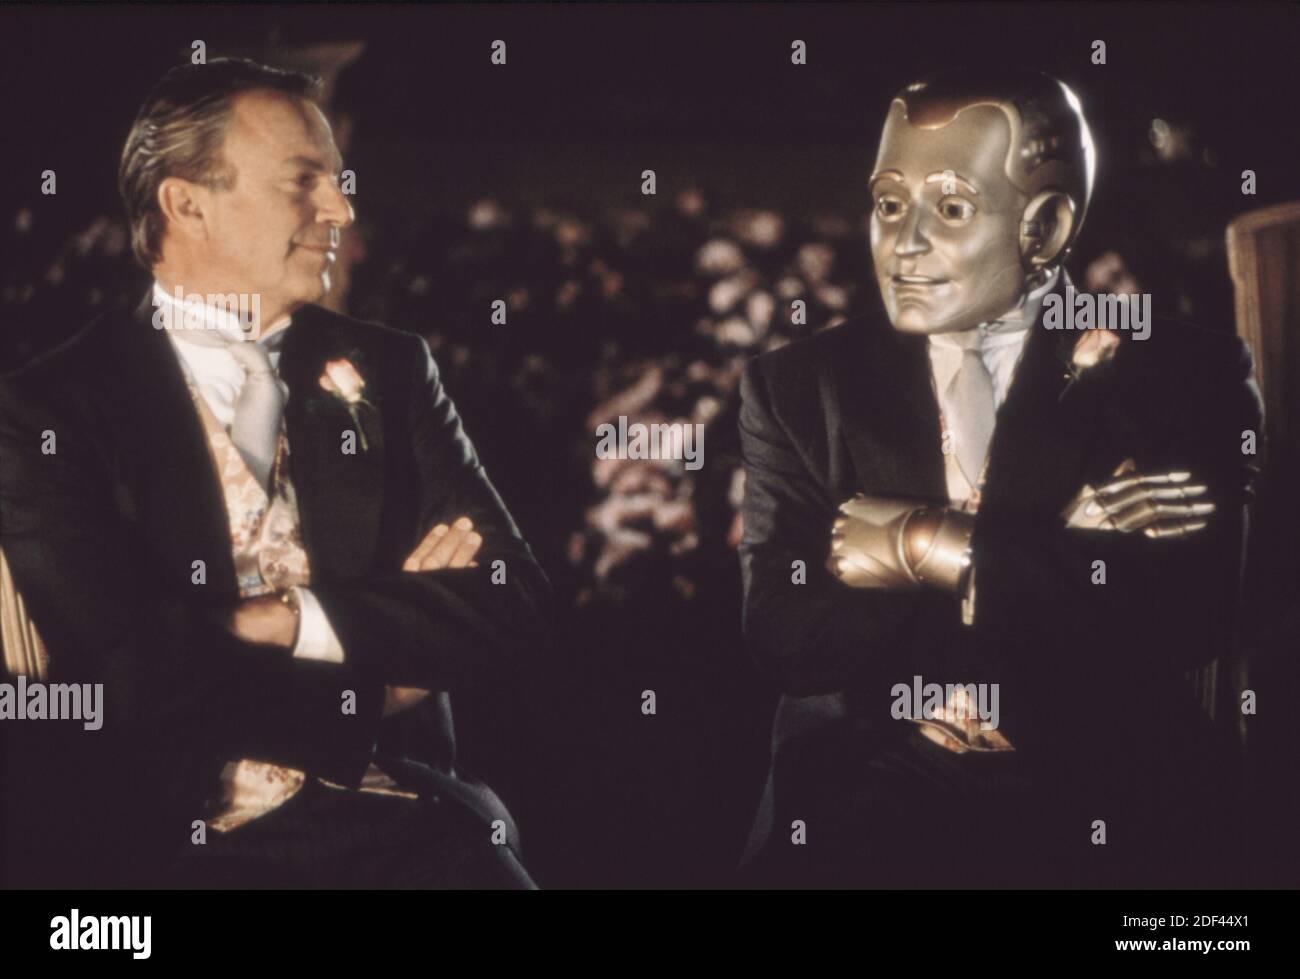 Sam neill (l) et Robin Williams dans BICENTENNIAL MAN, 1999 TouchstonePictures/Columbia Pictures Banque D'Images